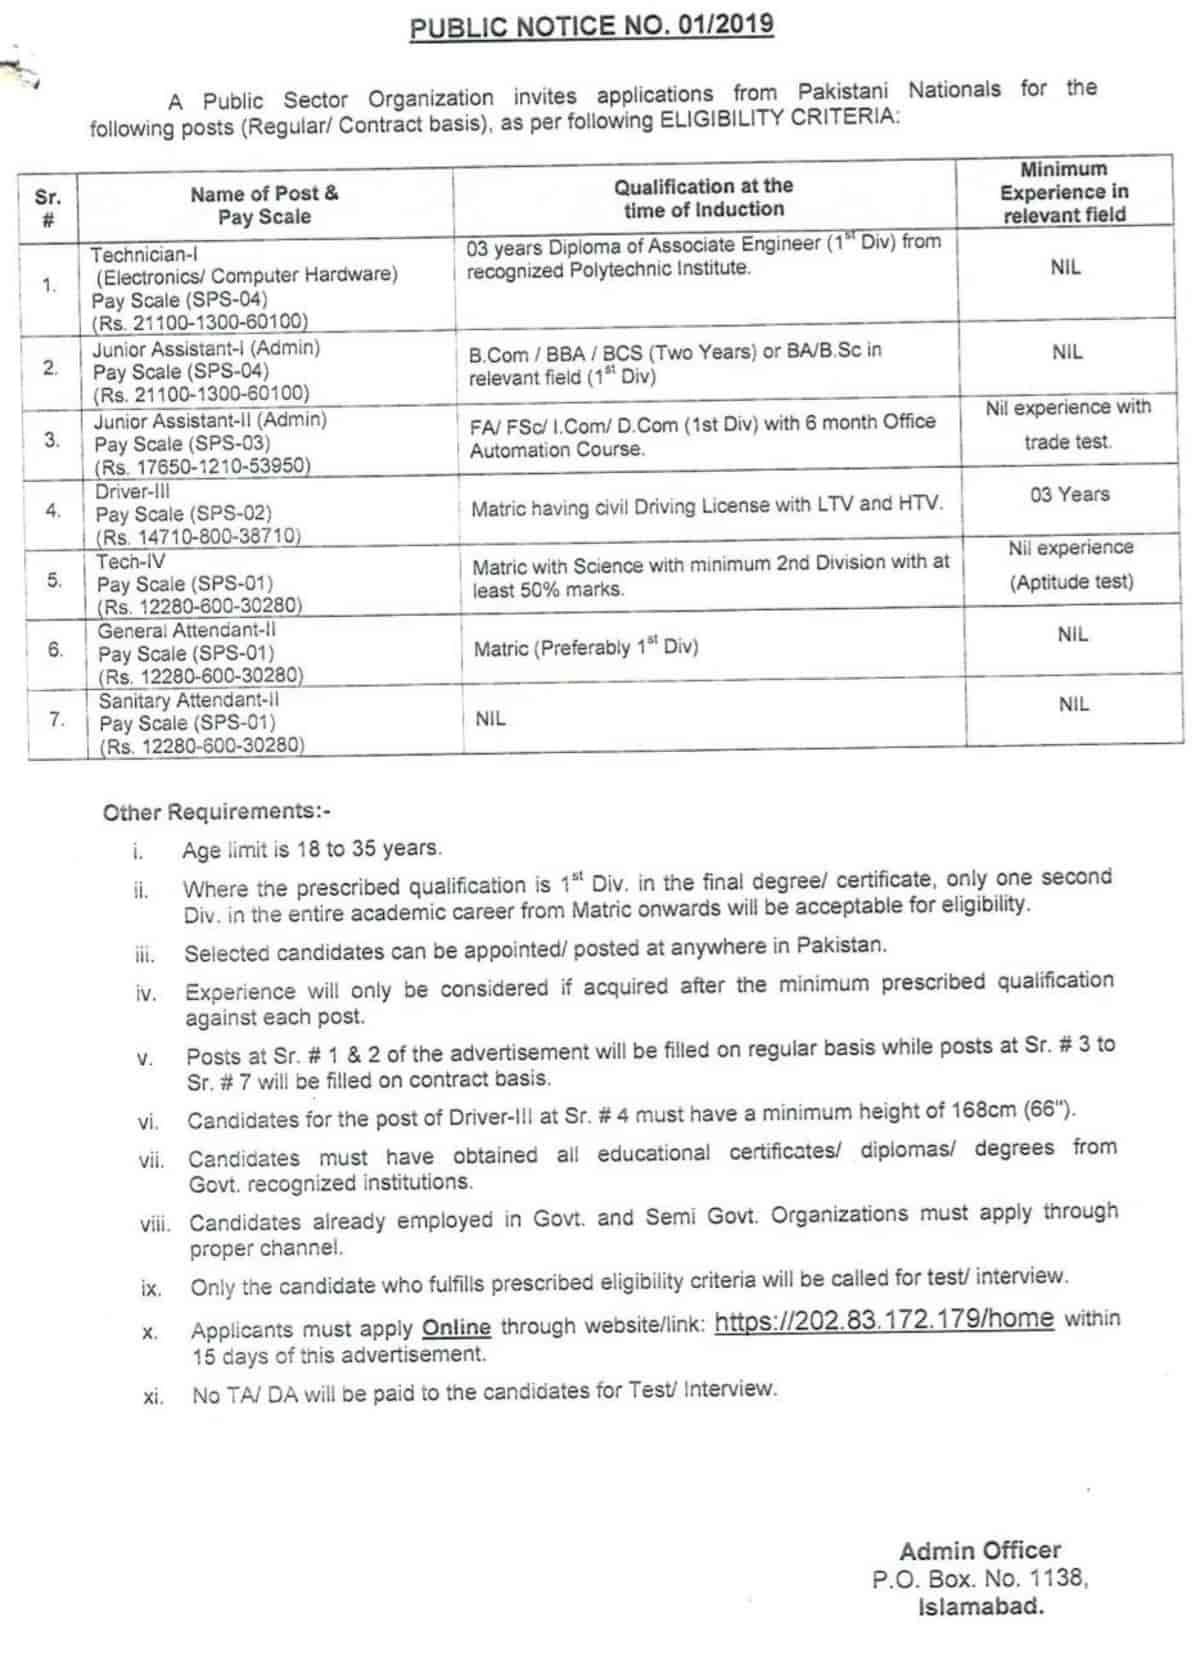 Pakistan Atomic Energy Commission Paec Po Box No 1138 Islamabad Jobs November 2019 202.83.172.179 Apply Online Latest Advertisement